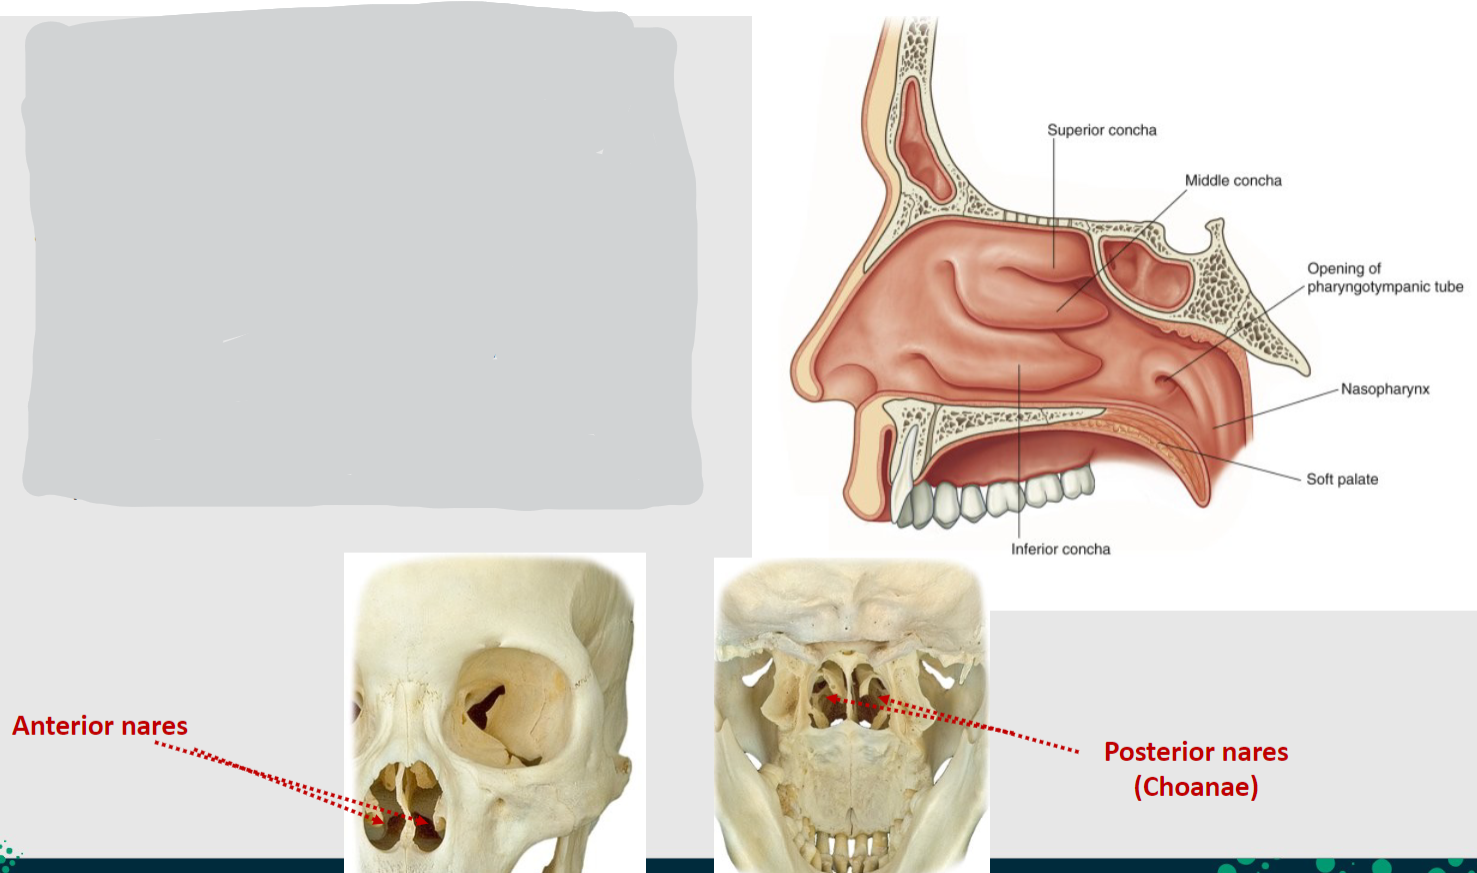 <p>The nasal cavity is entered anteriorly through the anterior nares (nostrils).</p>